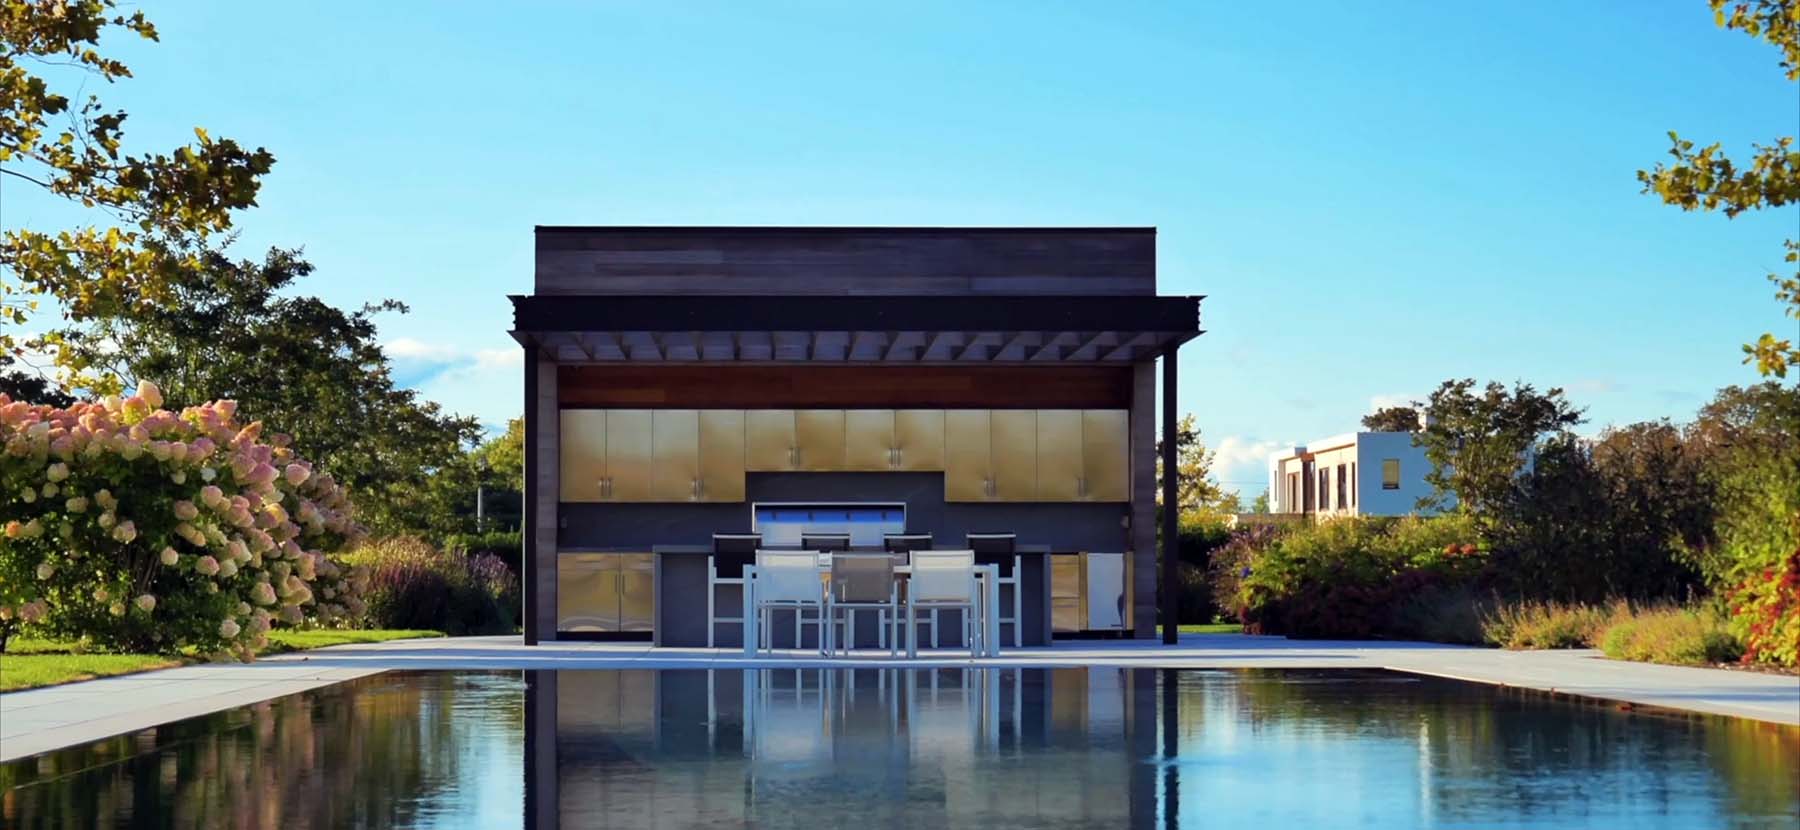 ny pool house design modern contemporary